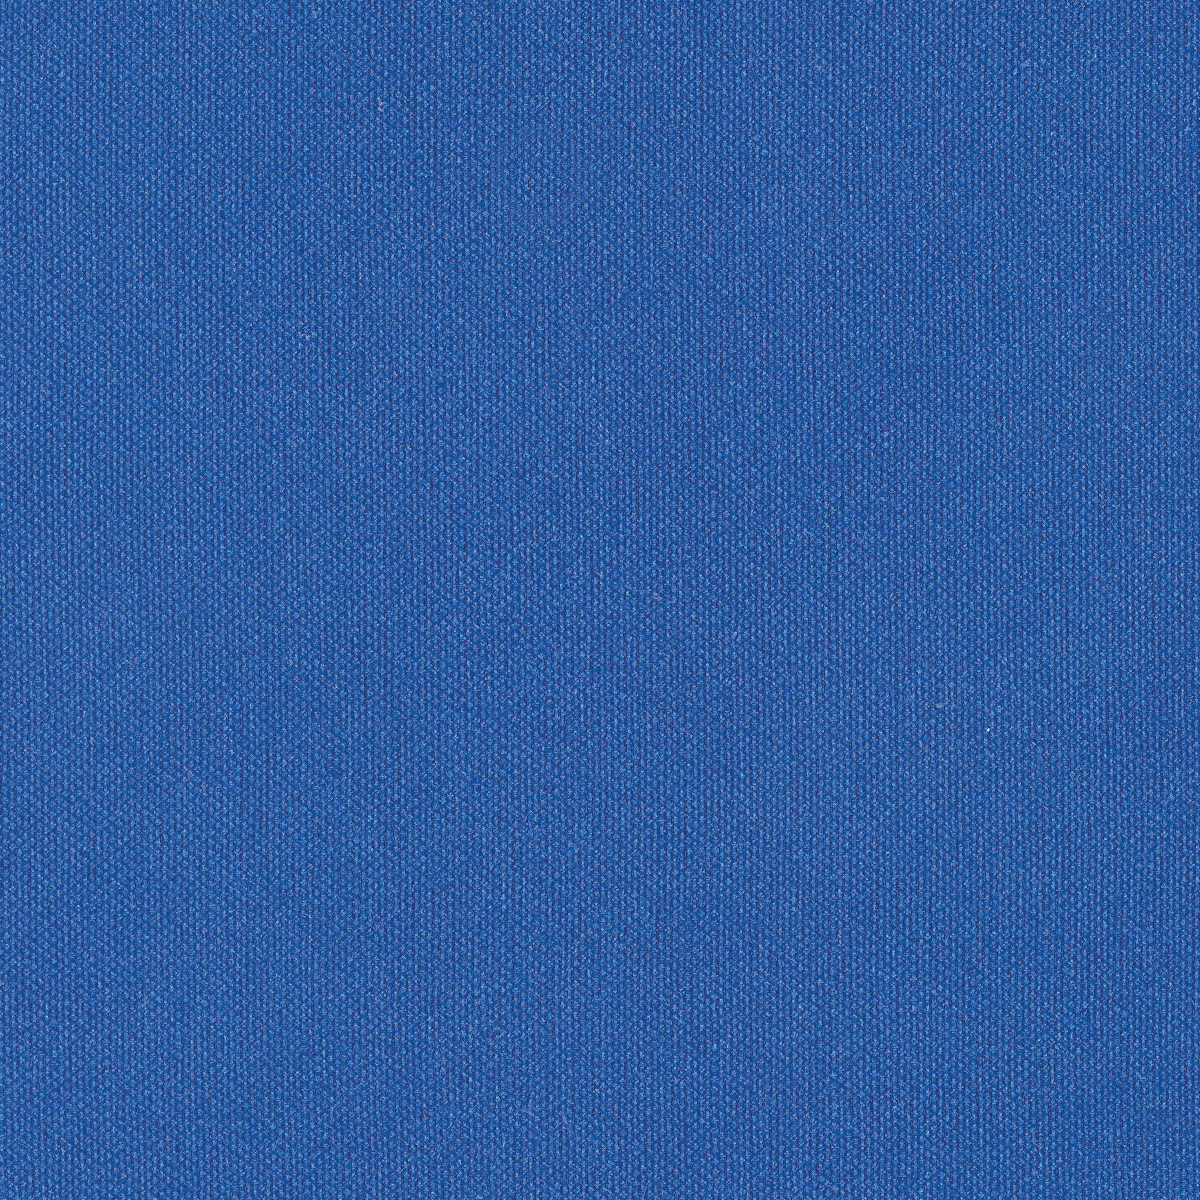 8801 Marine Blue